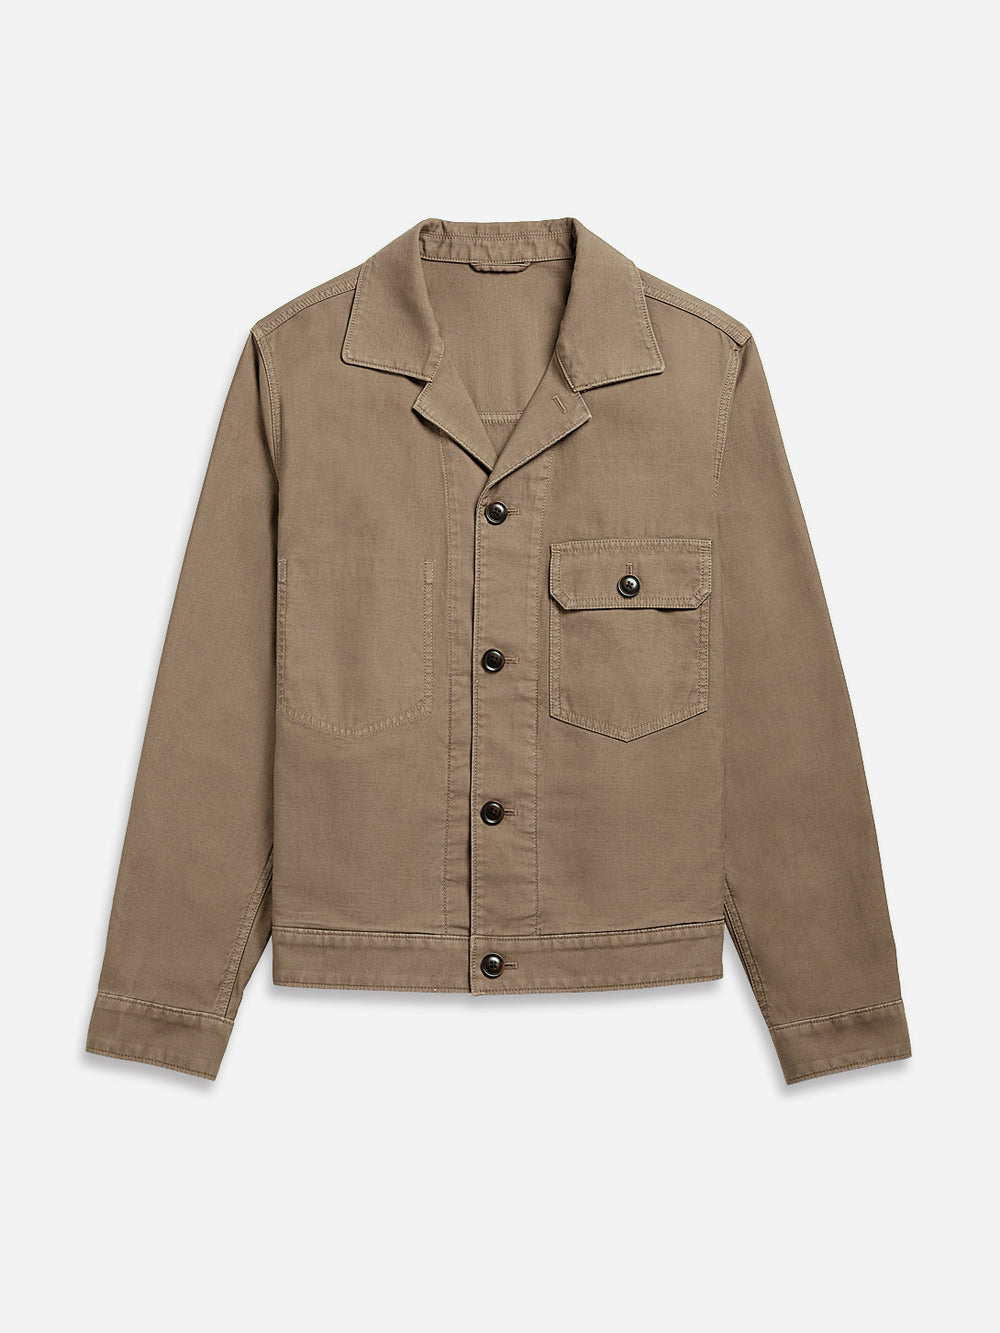 Dk Brown Elliot Garment Dyed Jacket Mens Worker Outerwear Button Closure